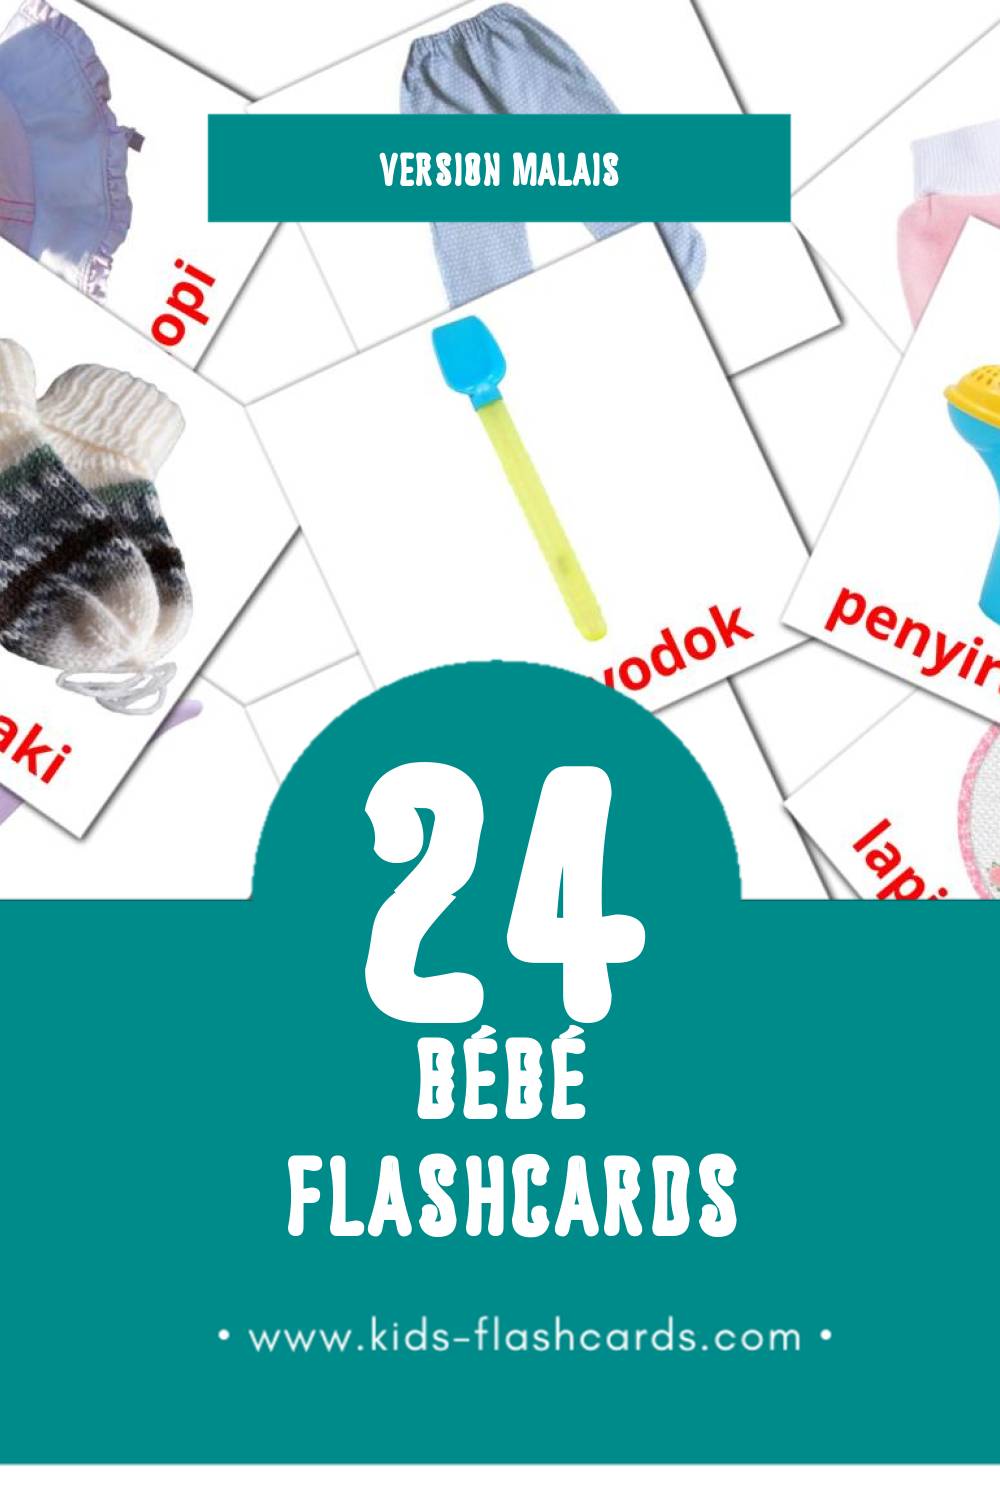 Flashcards Visual Bayi pour les tout-petits (13 cartes en Malais)